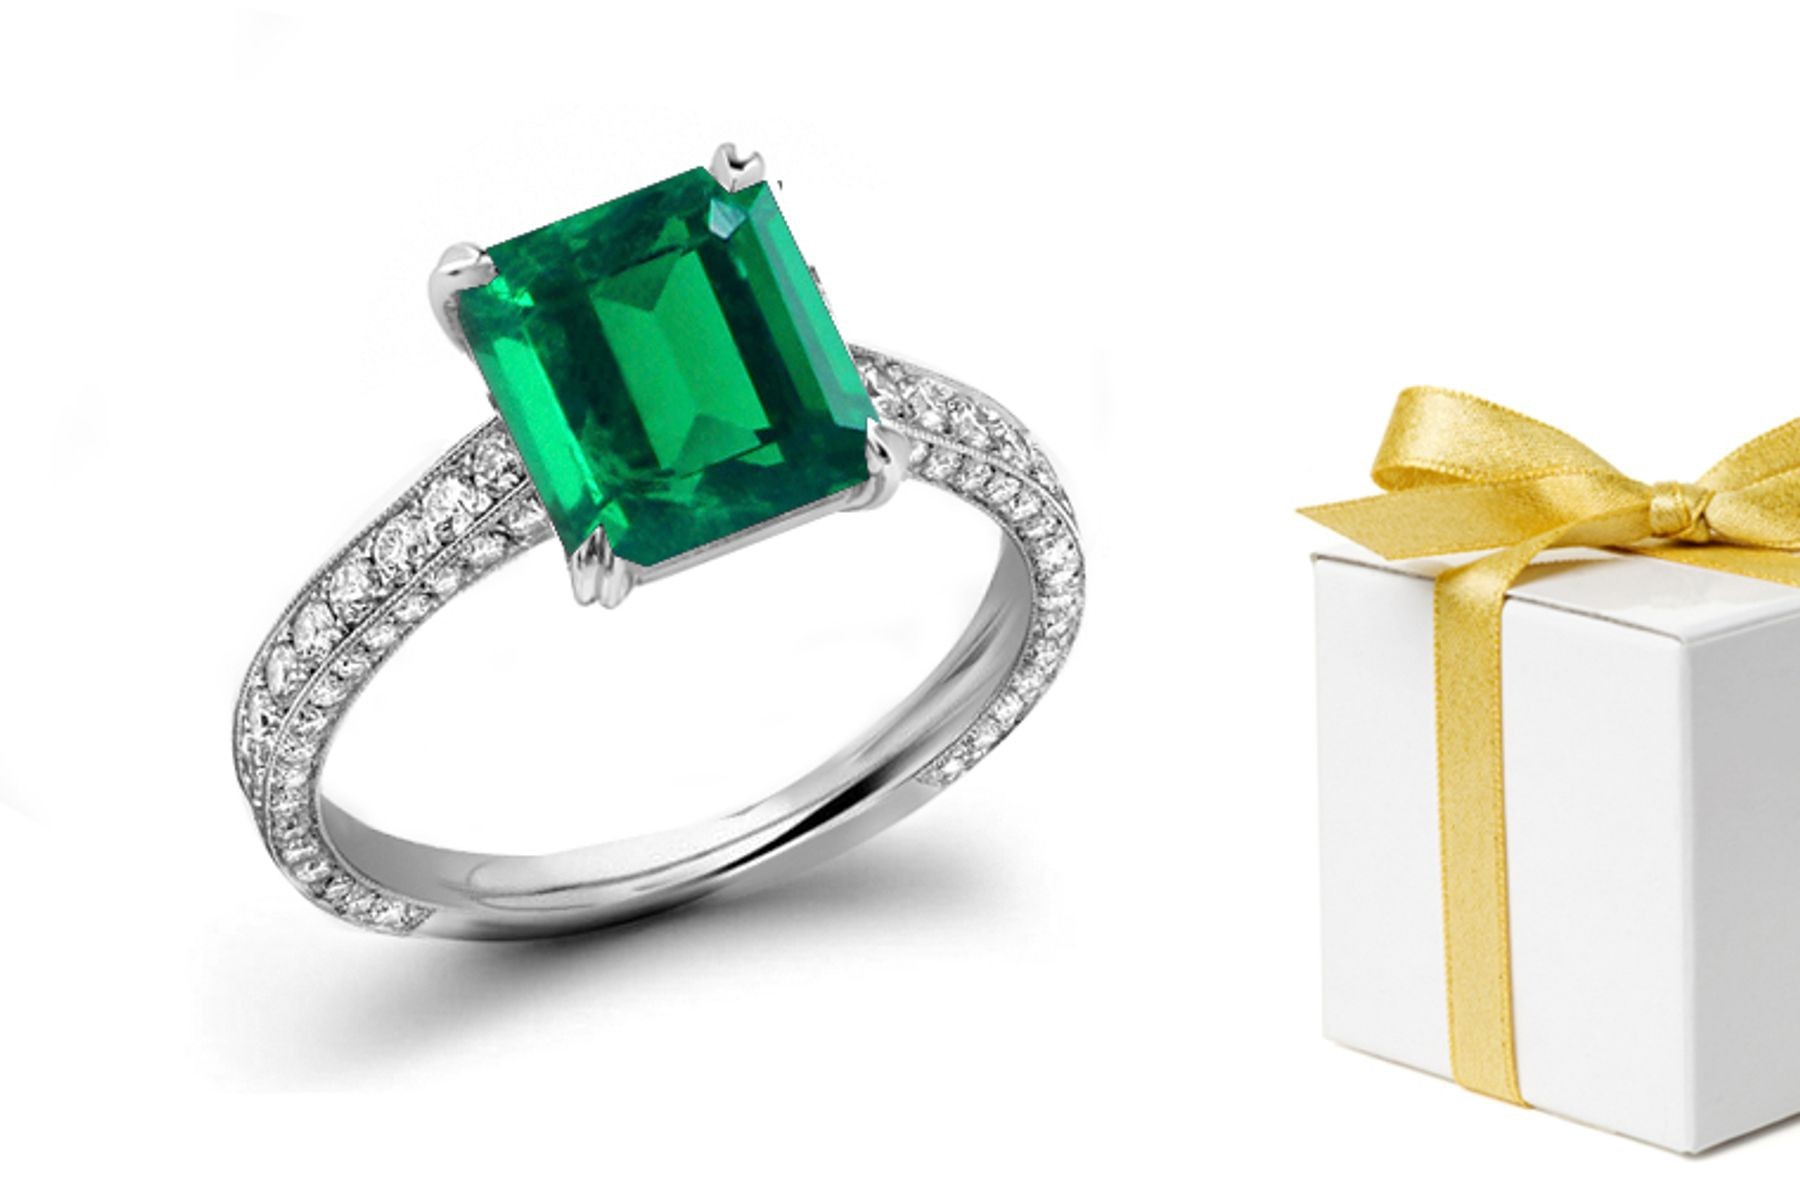 EXCLUSIVE DESIGN: Emerald Cut Emerald & Micropav & Halo Diamond Ring Color Creating A Sense of Movement